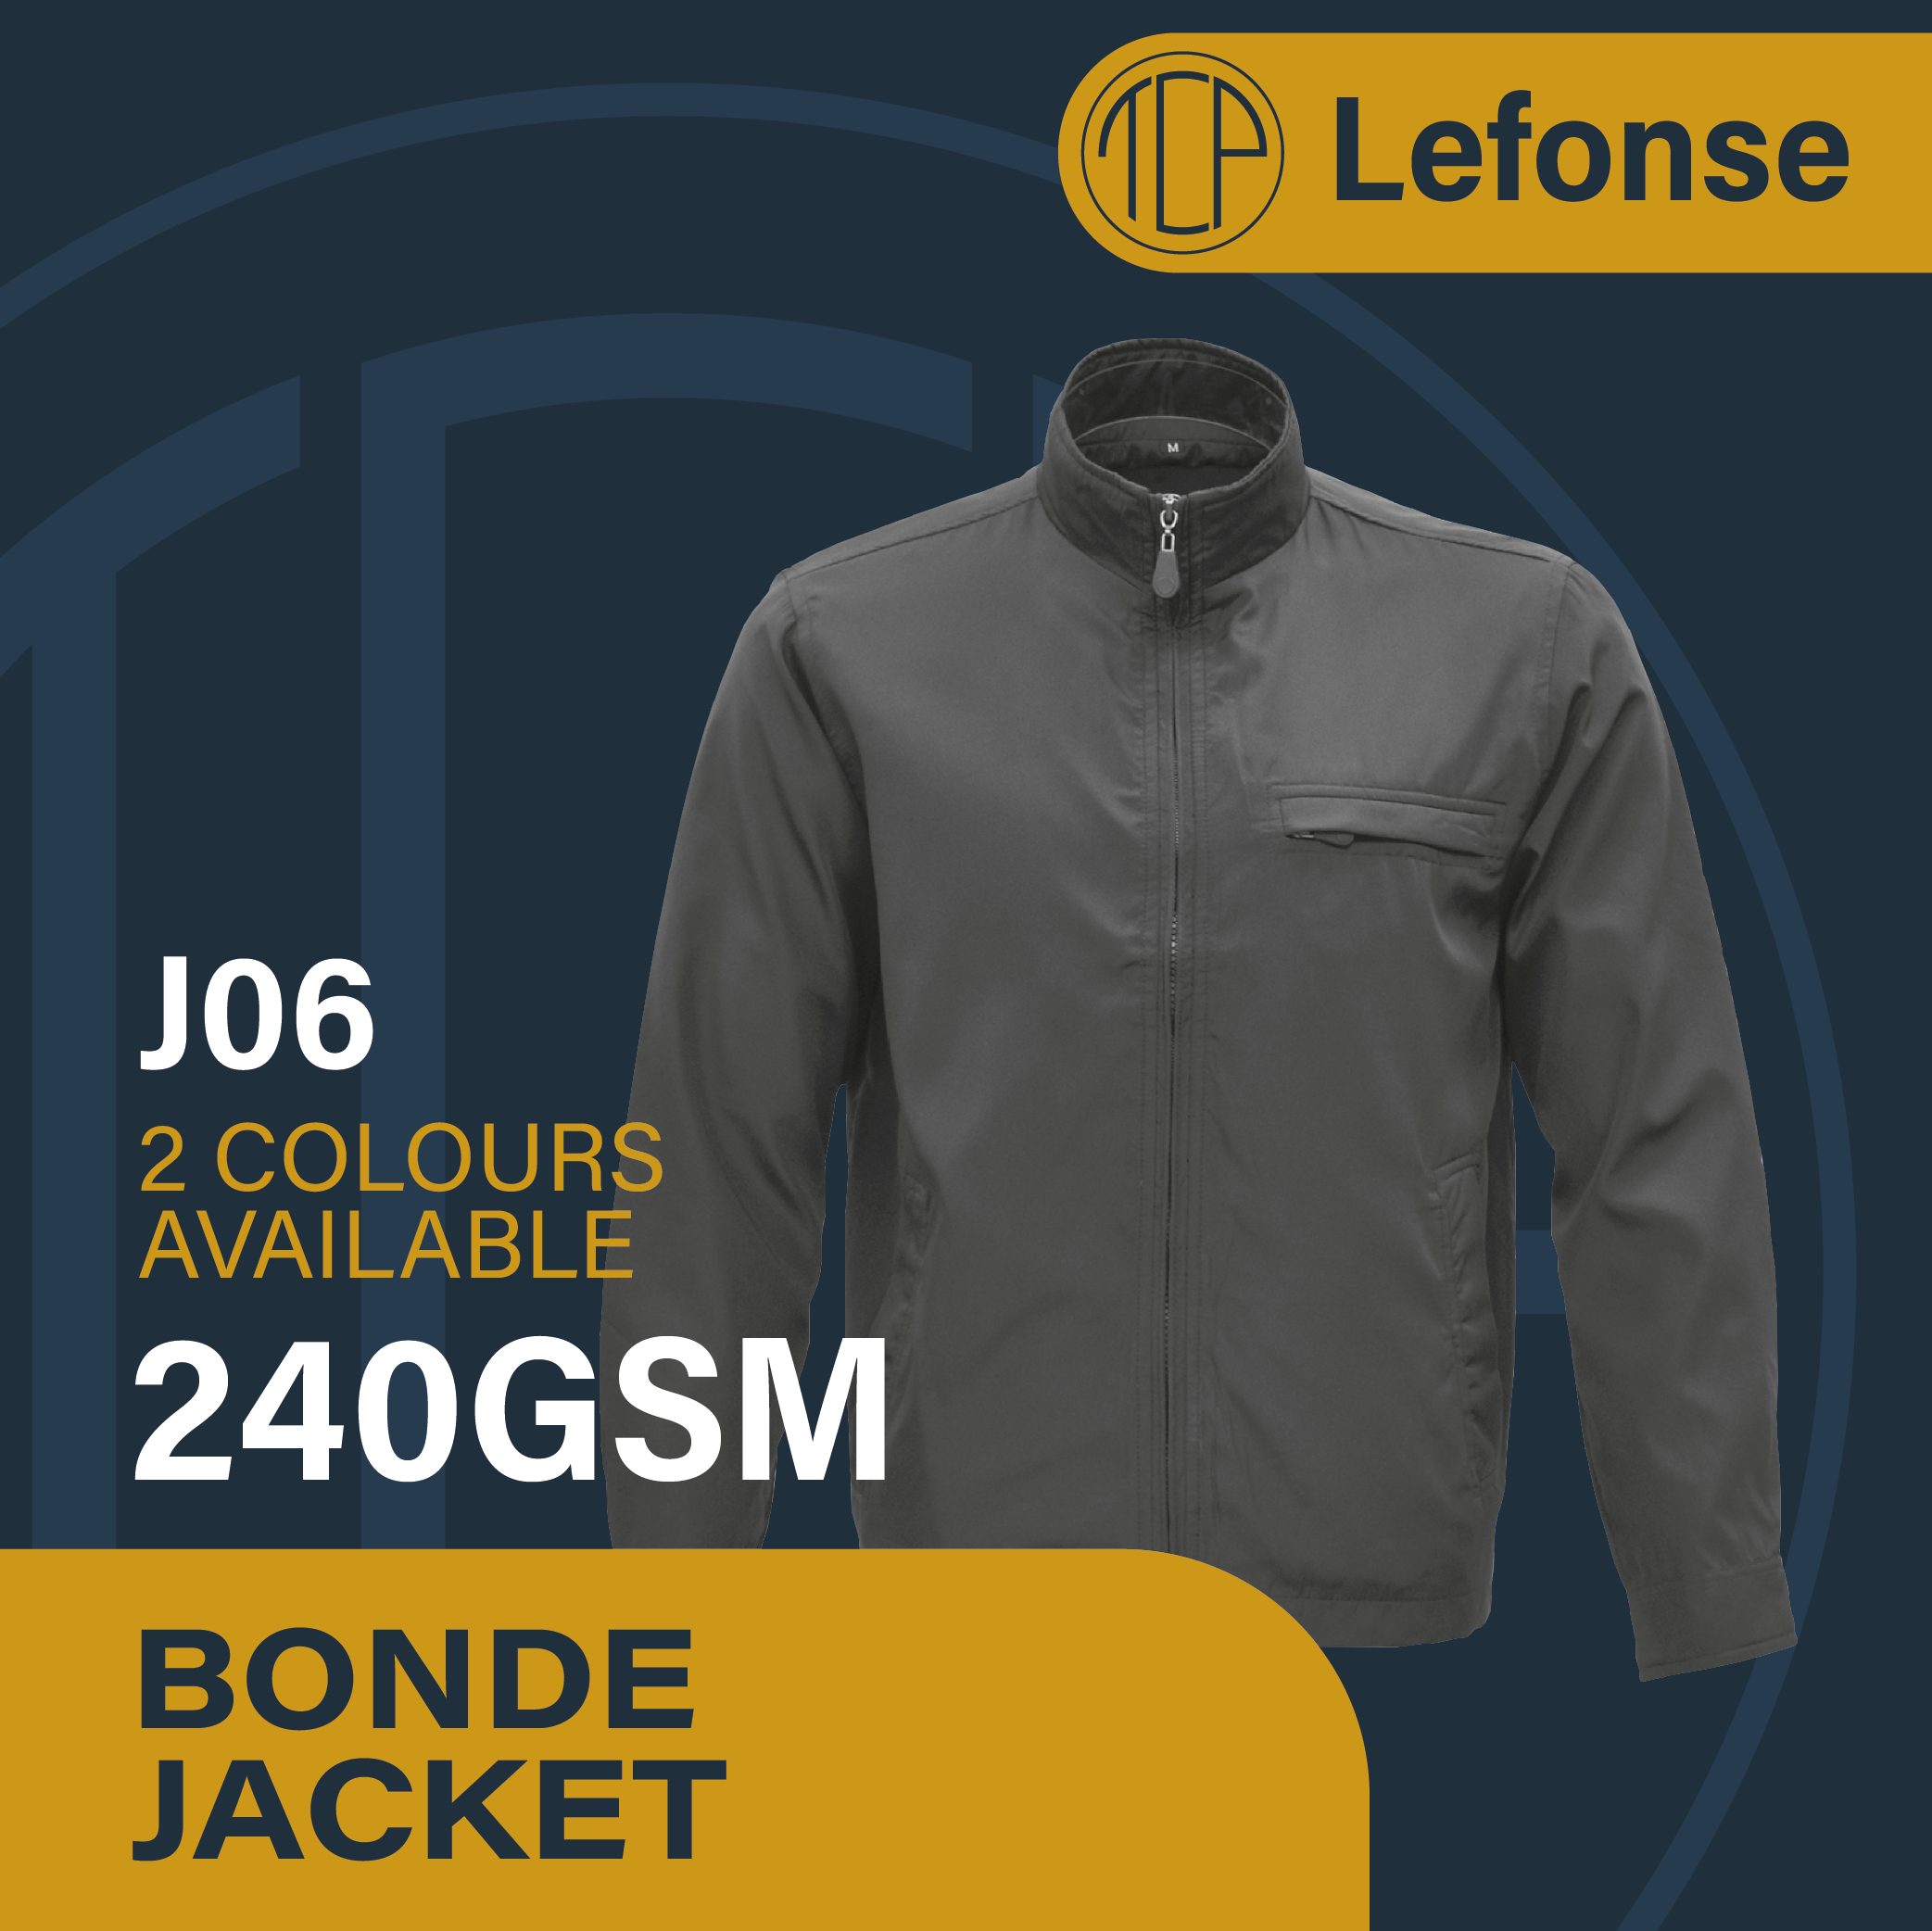 Lefonse J06 Bonde Jacket customproject.my